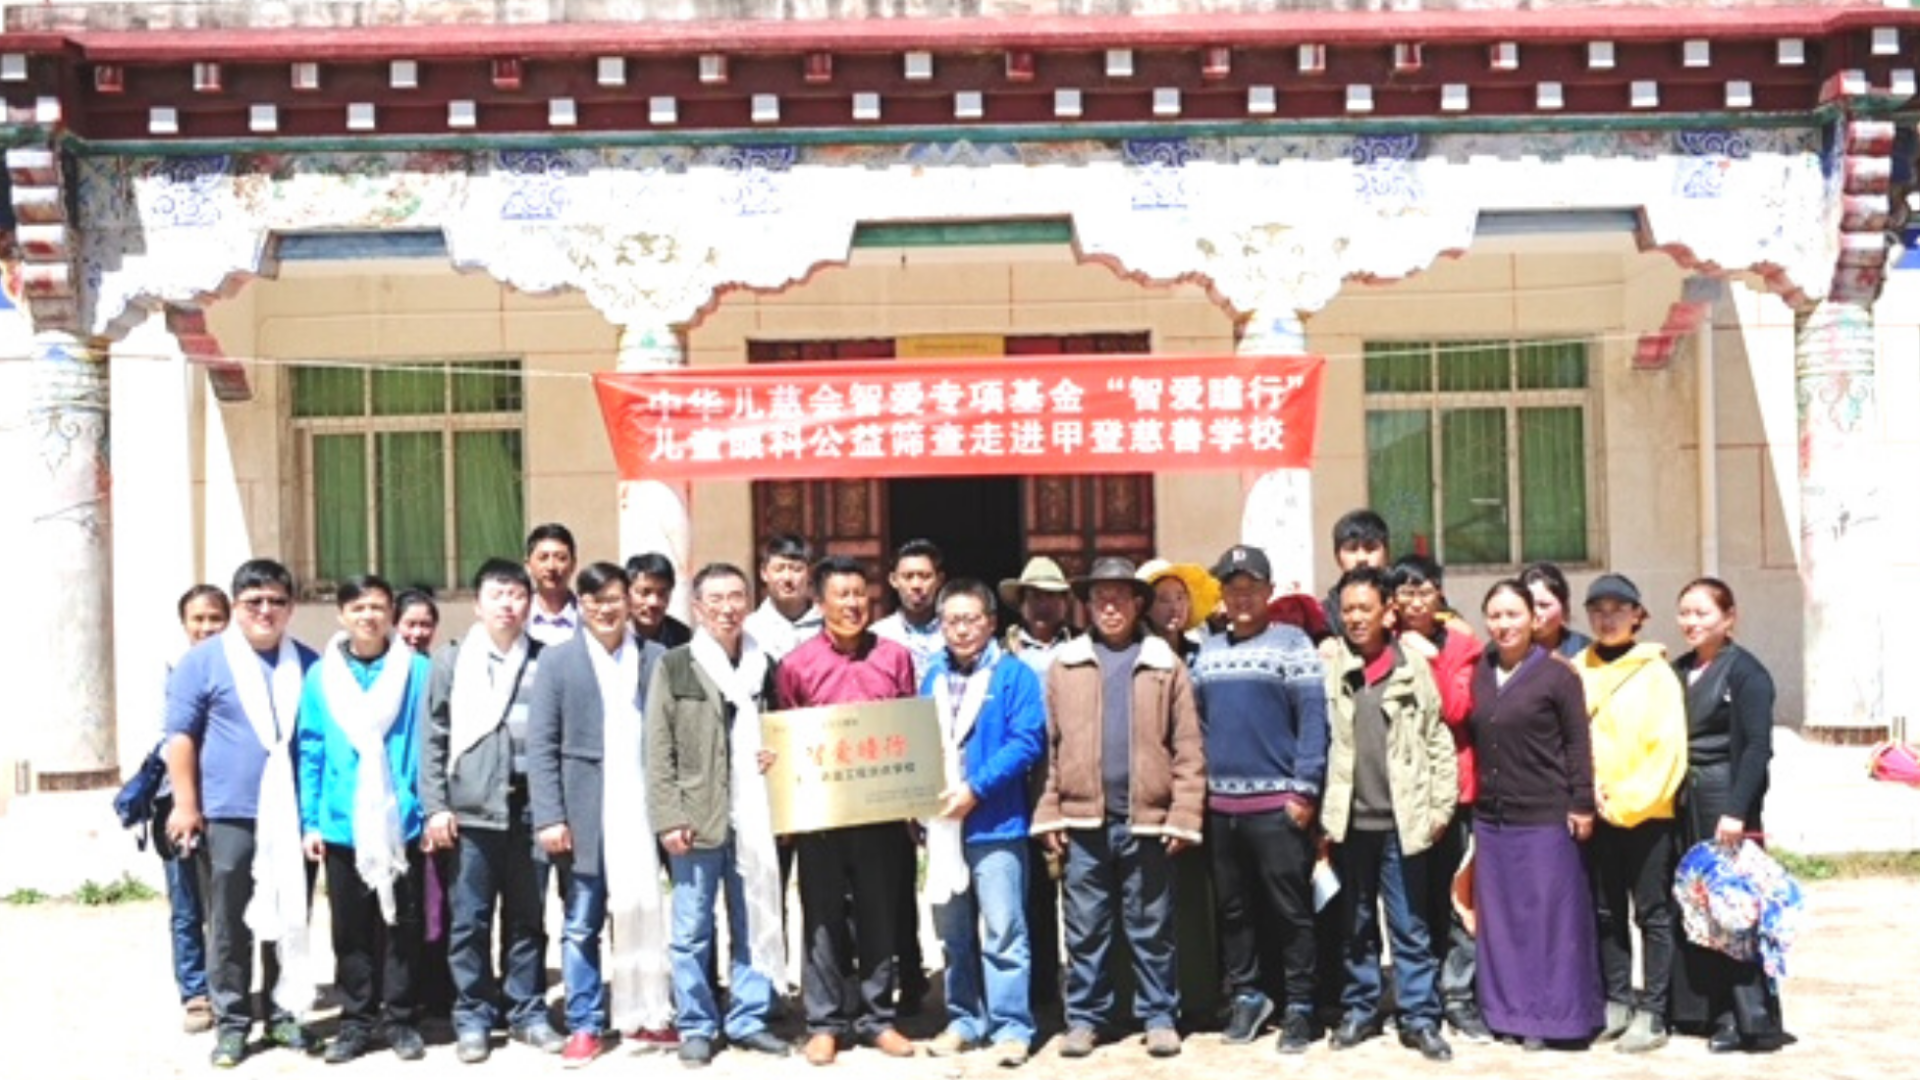 Teachers and staff at the Gyalten School in Sichuan's Kardze Tibetan Autonomous Prefecture